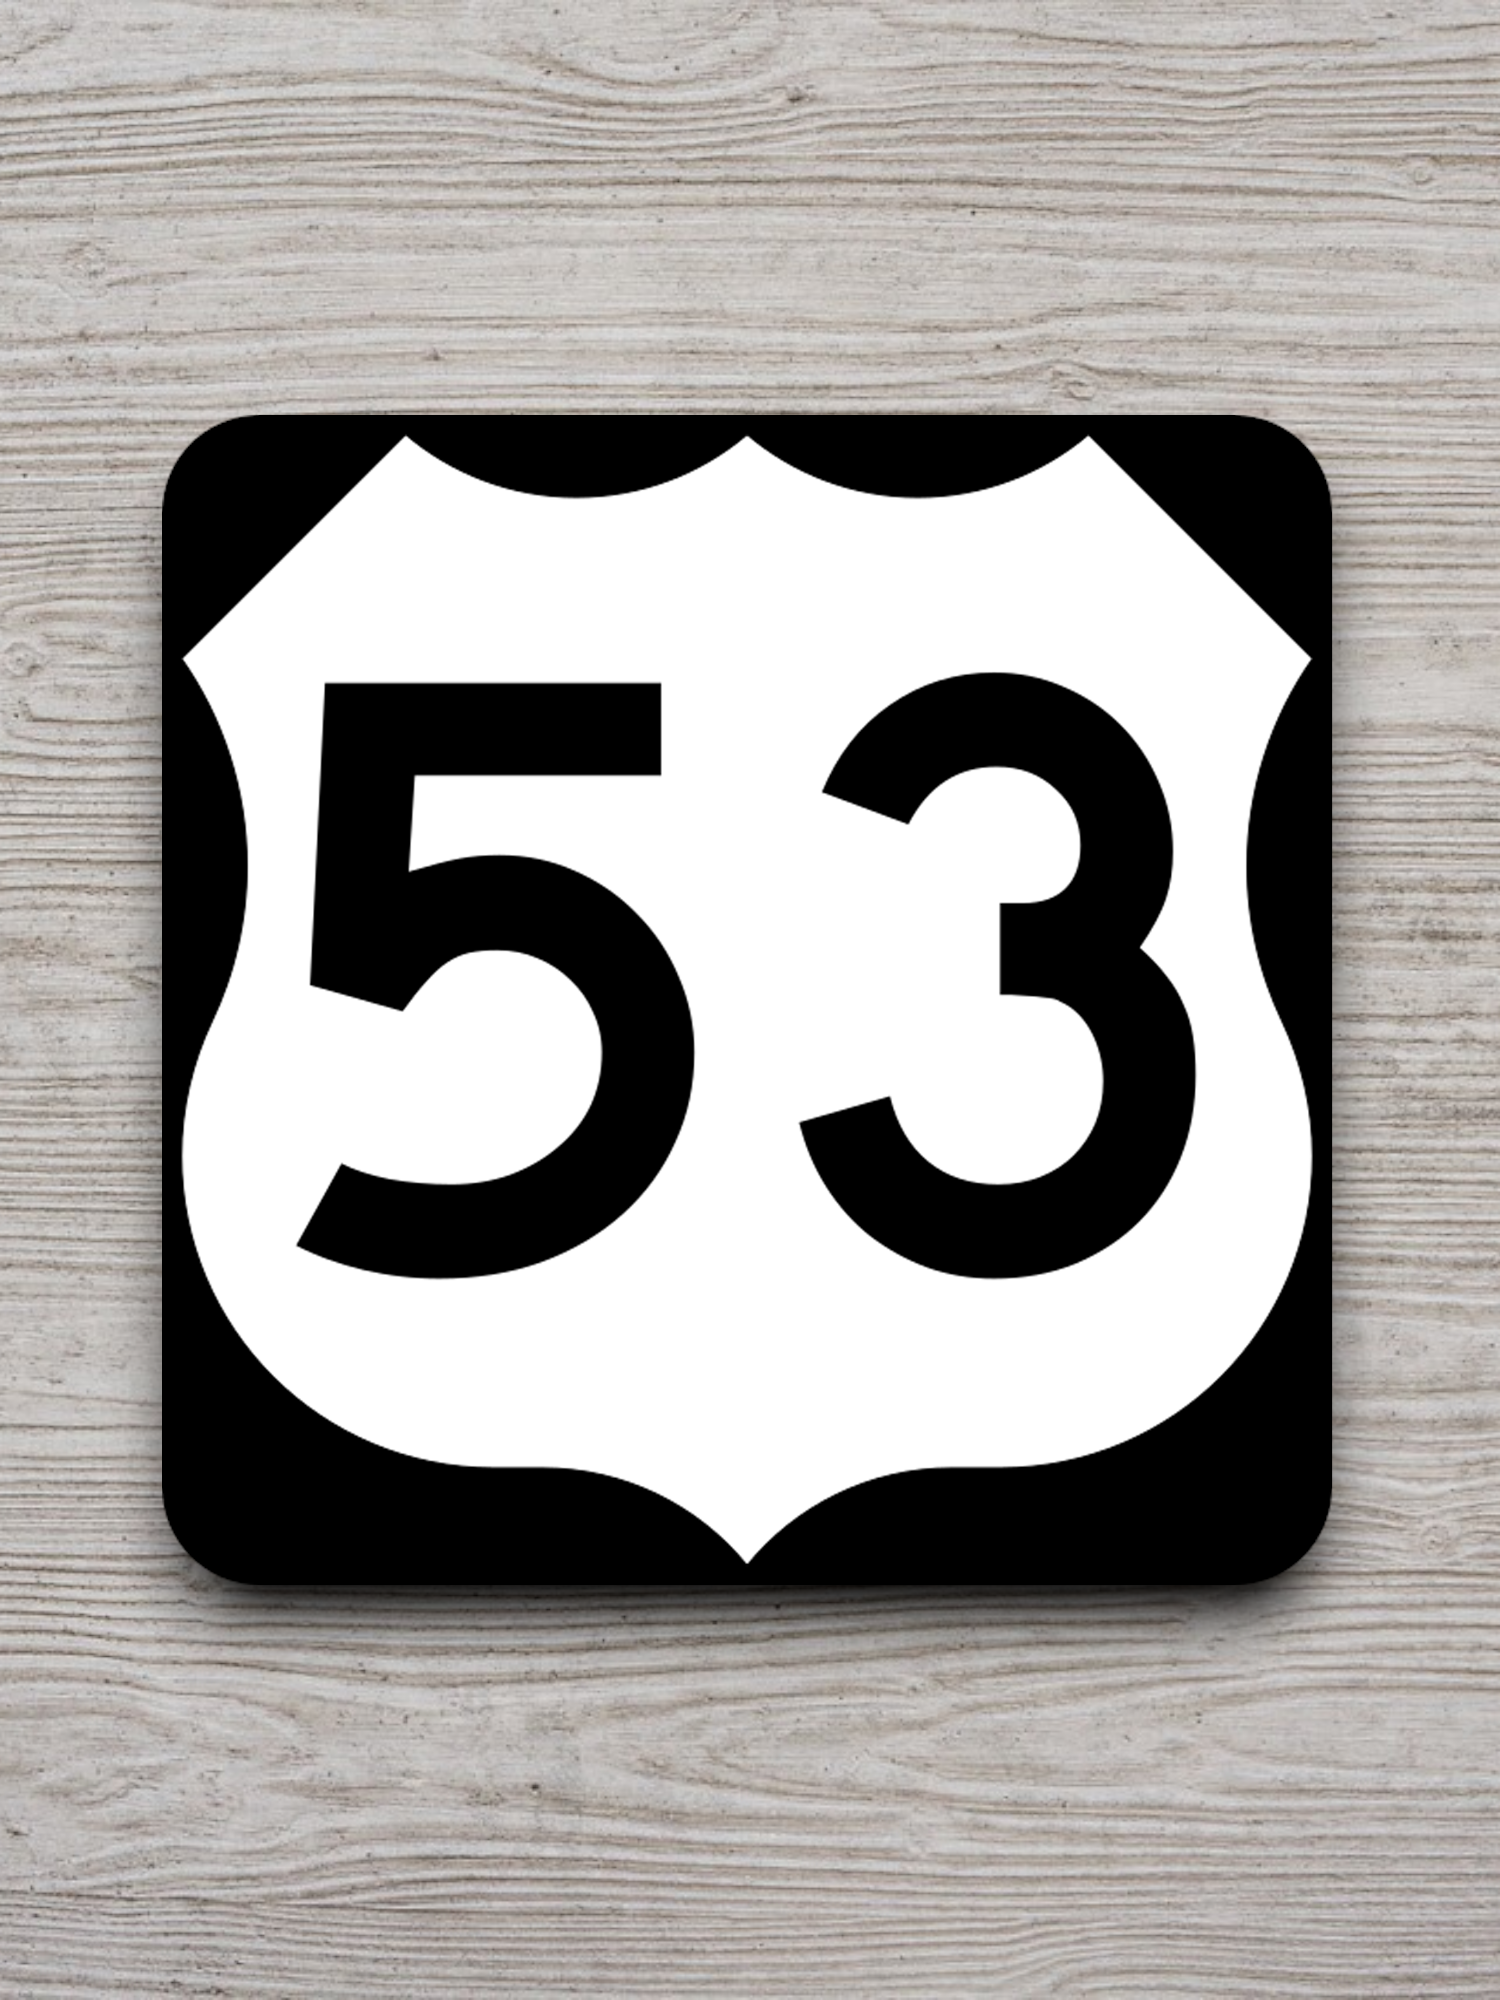 U.S. Route 53 Road Sign Sticker